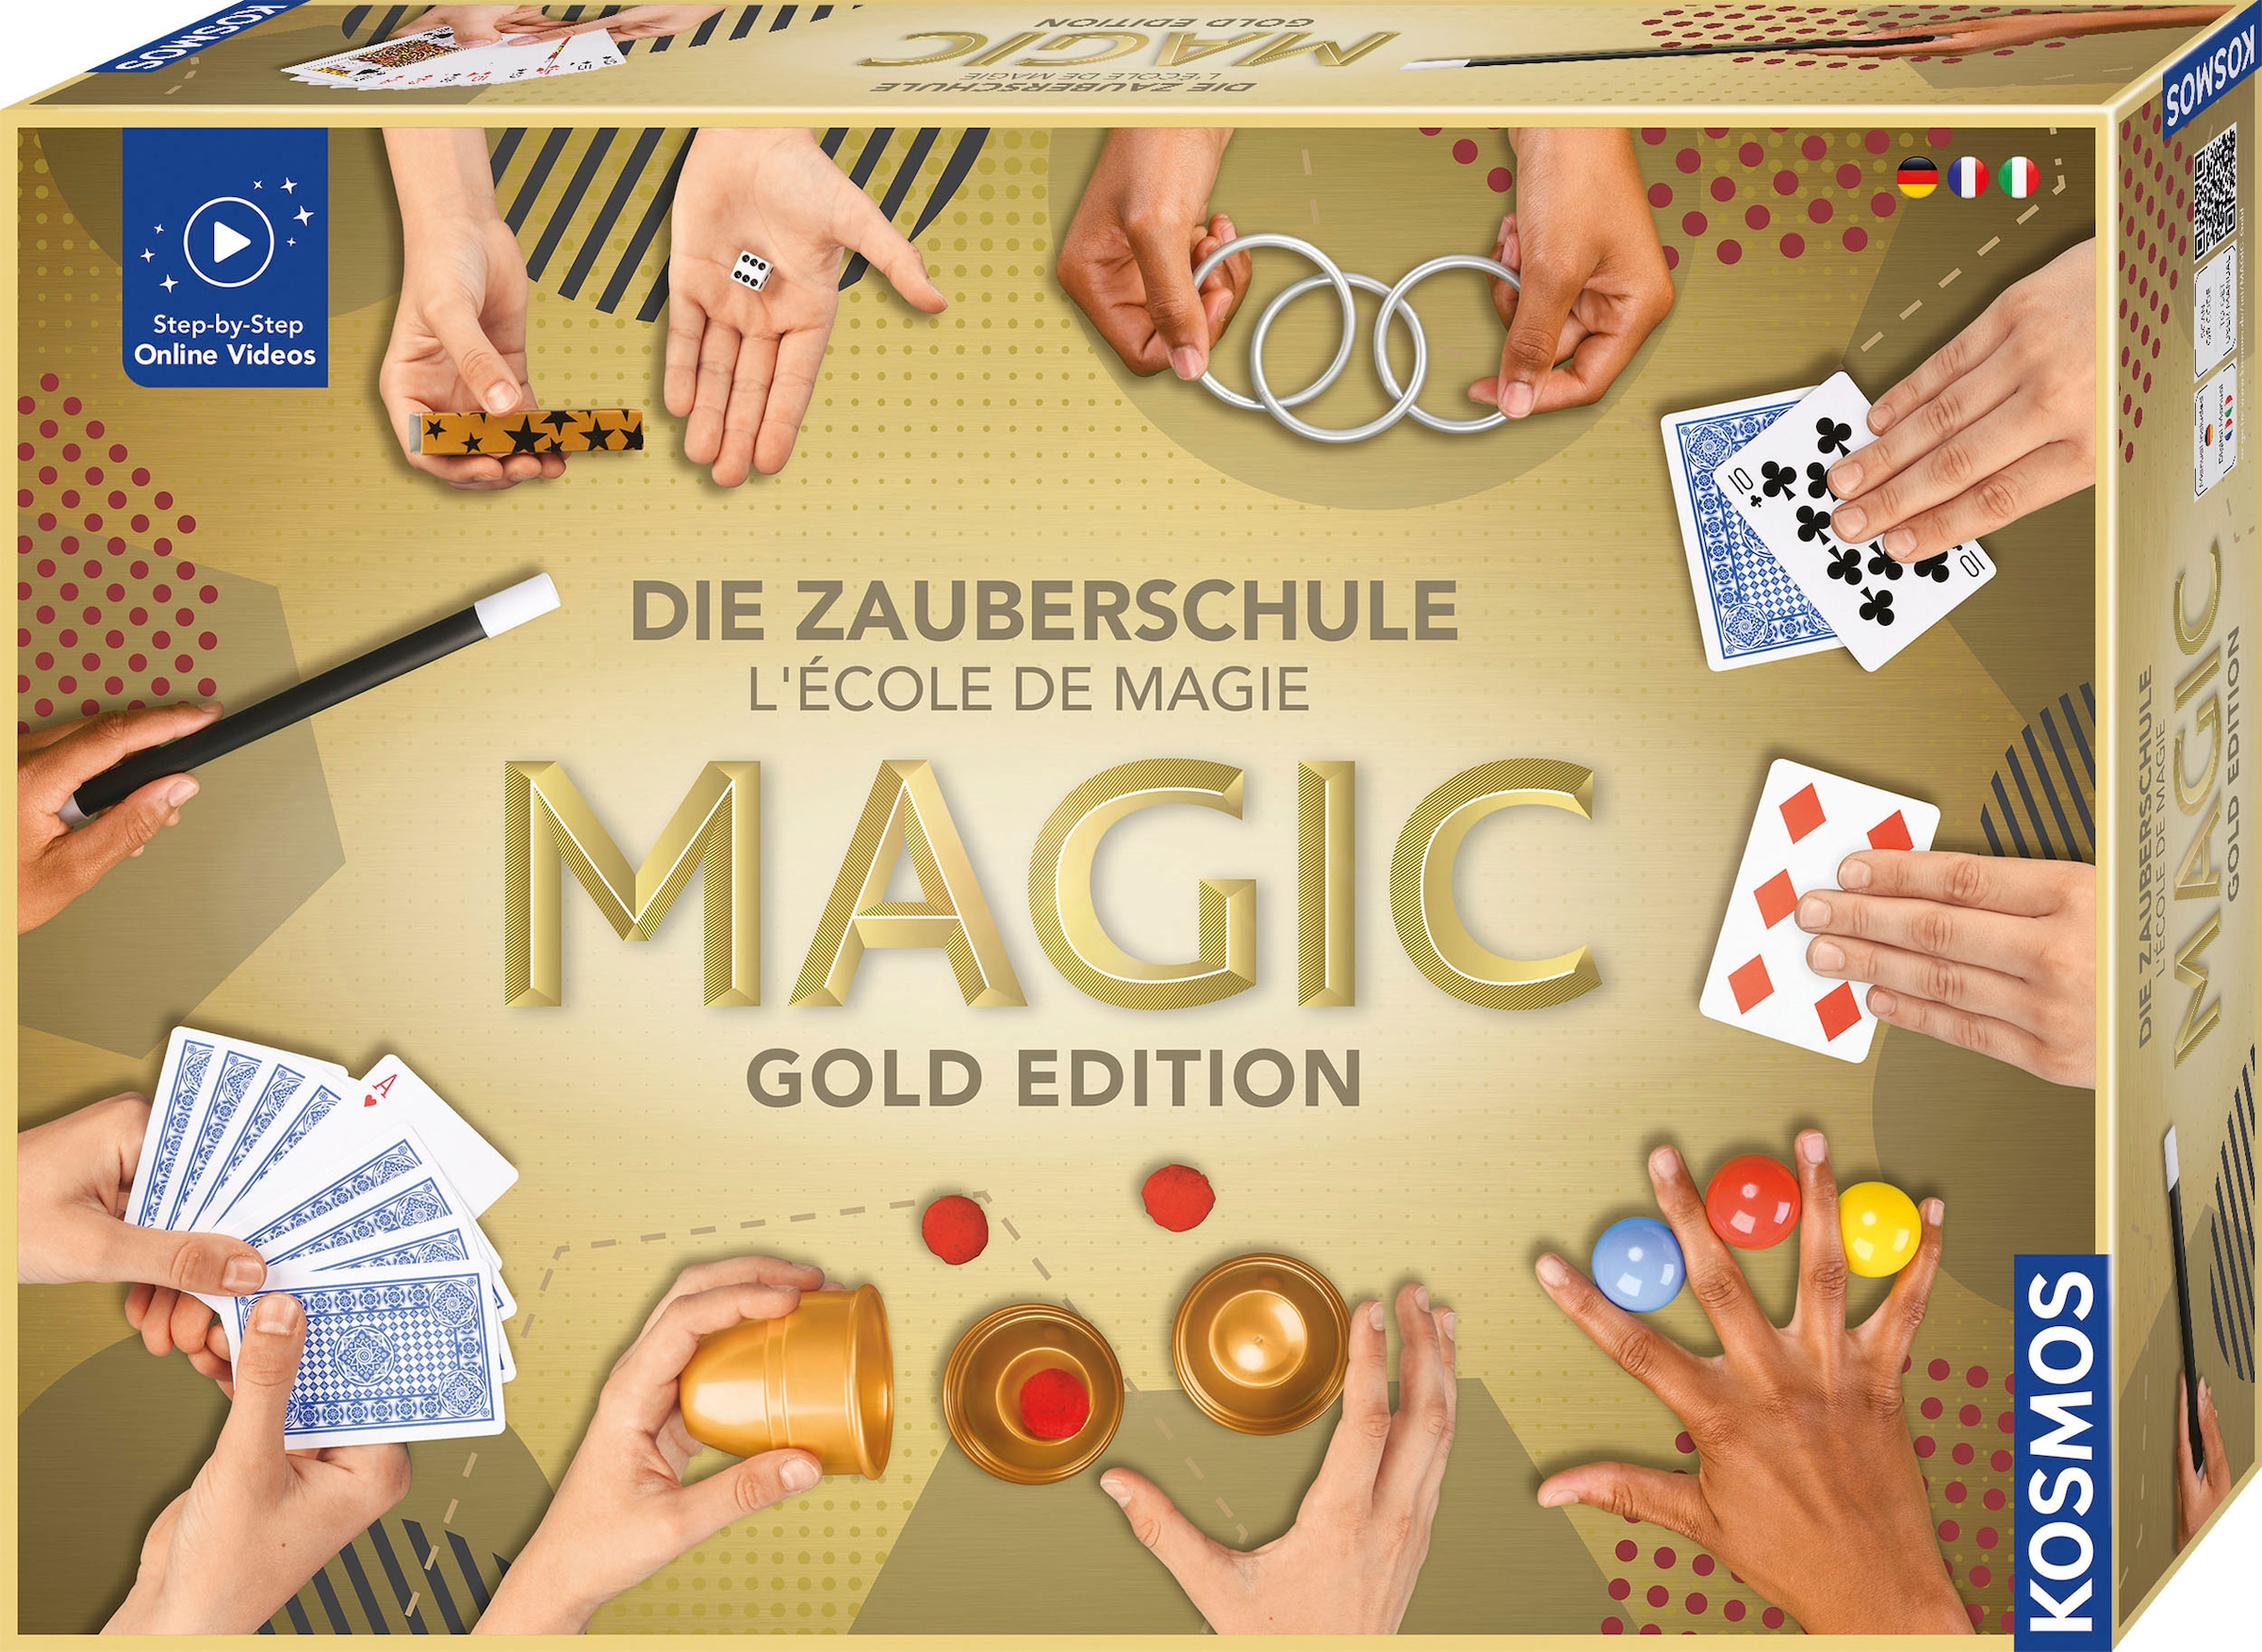 Zauberkasten »Die Zauberschule Magic - Gold Edition DFI«